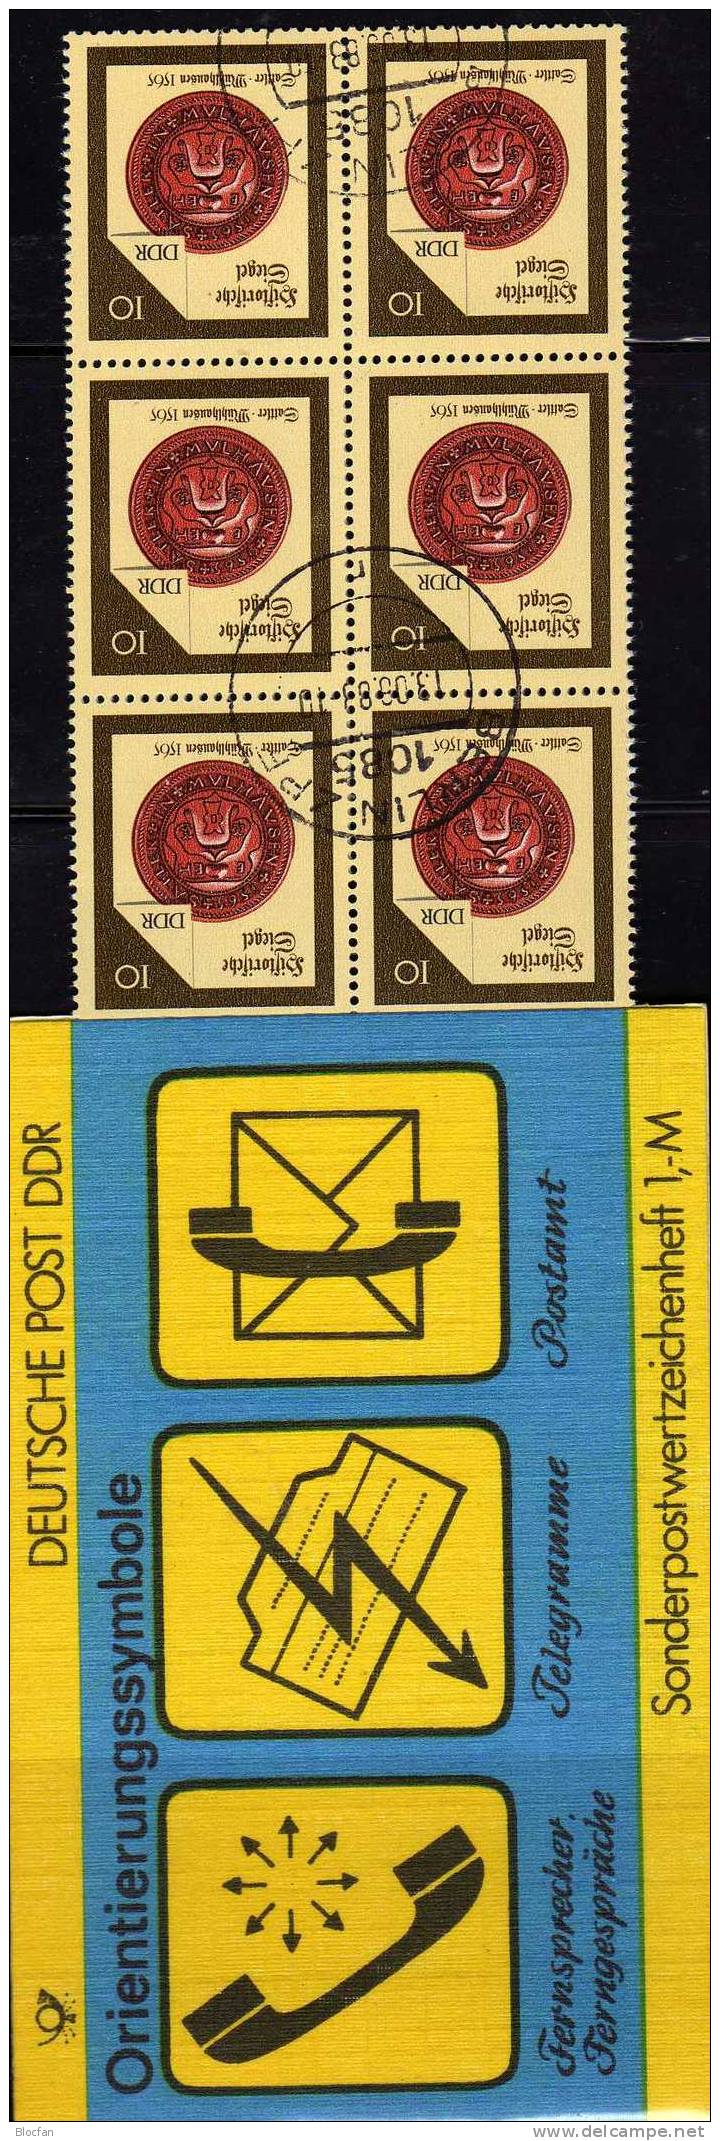 SMH 32 Orientierungs-Sympole Der Post 1987 Telefon Telegramm Fax DDR 10x3156 + SMHD32 O 8€ Mit Siegel Booklet Of Germany - Cuadernillos